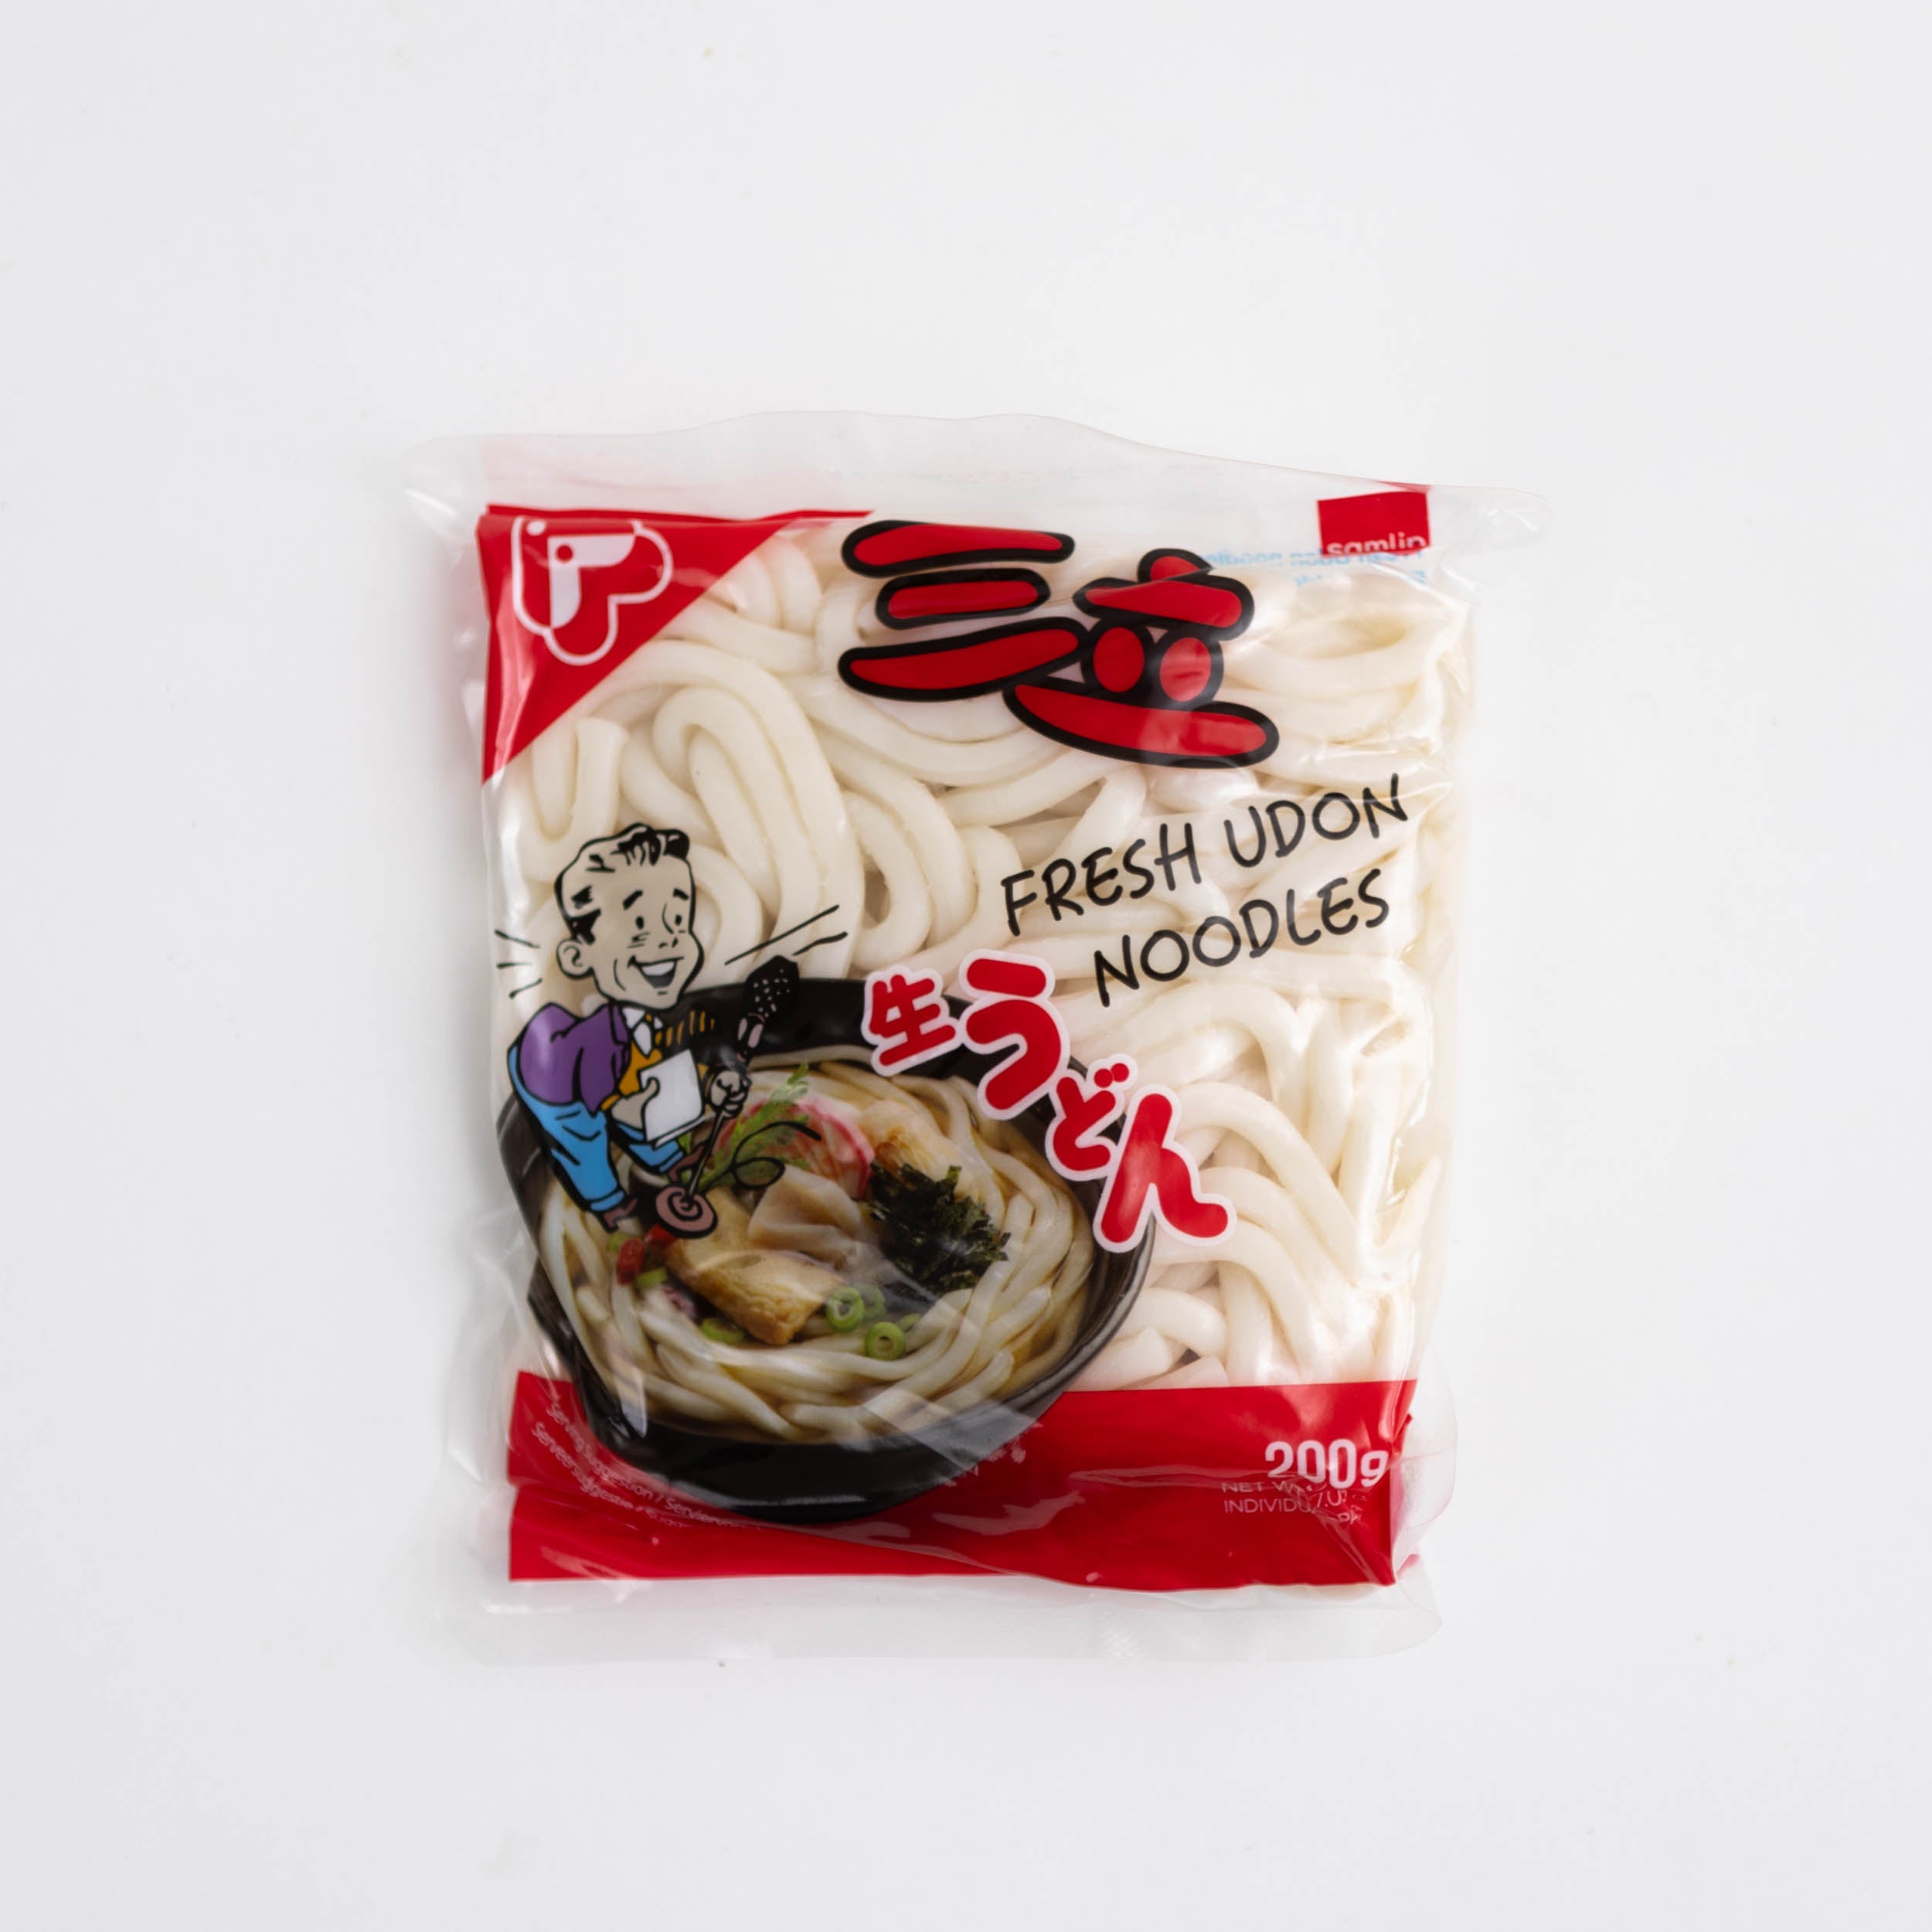 dinese.de onlineshop fresh udon noodles nudeln japanisch asiashop asiatische lebensmittel ramen asia shop